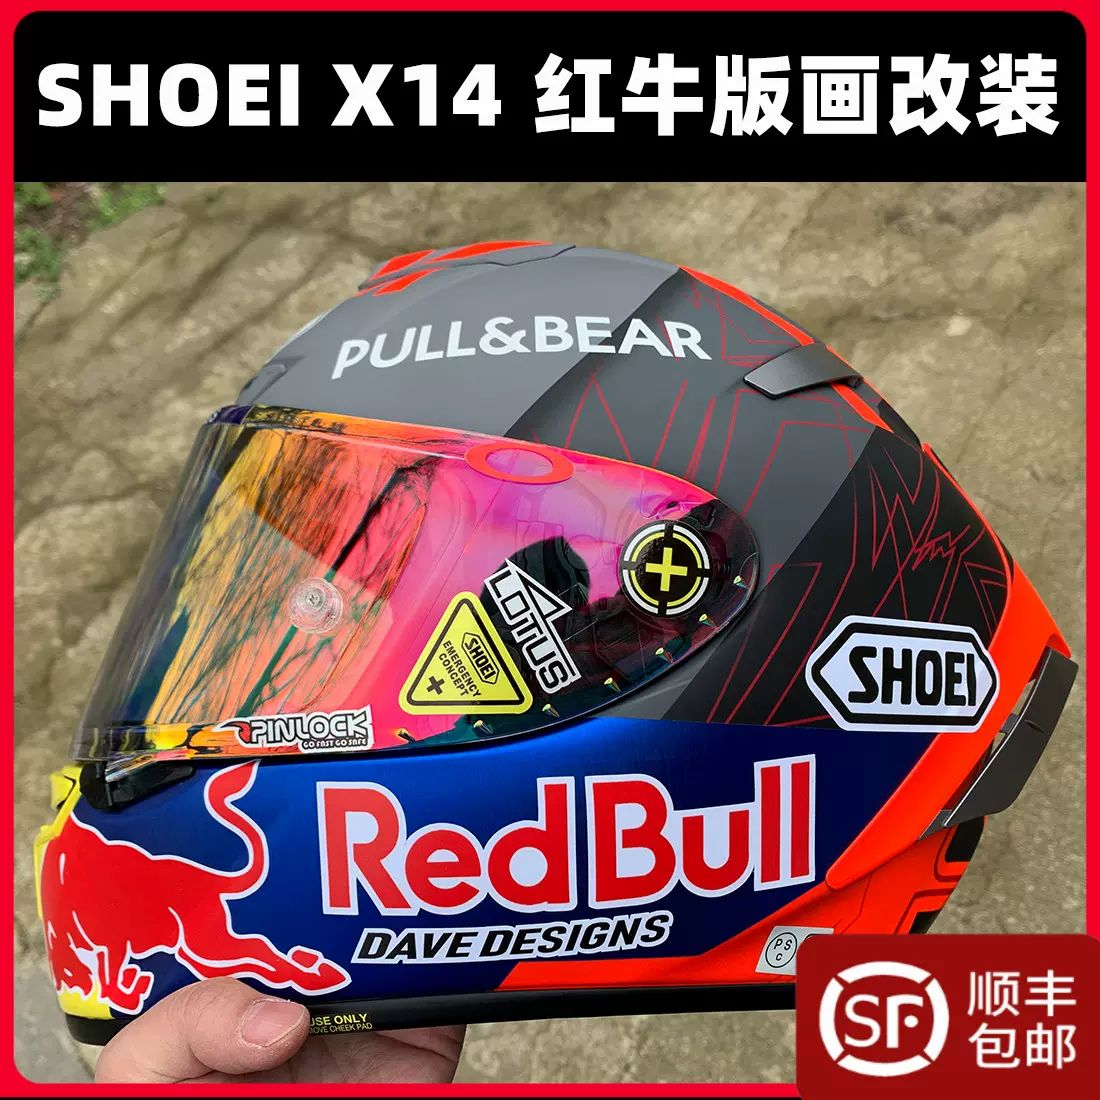 Shoeix14马奎斯同款红牛red Bull贴纸涂装摩托车z7头盔